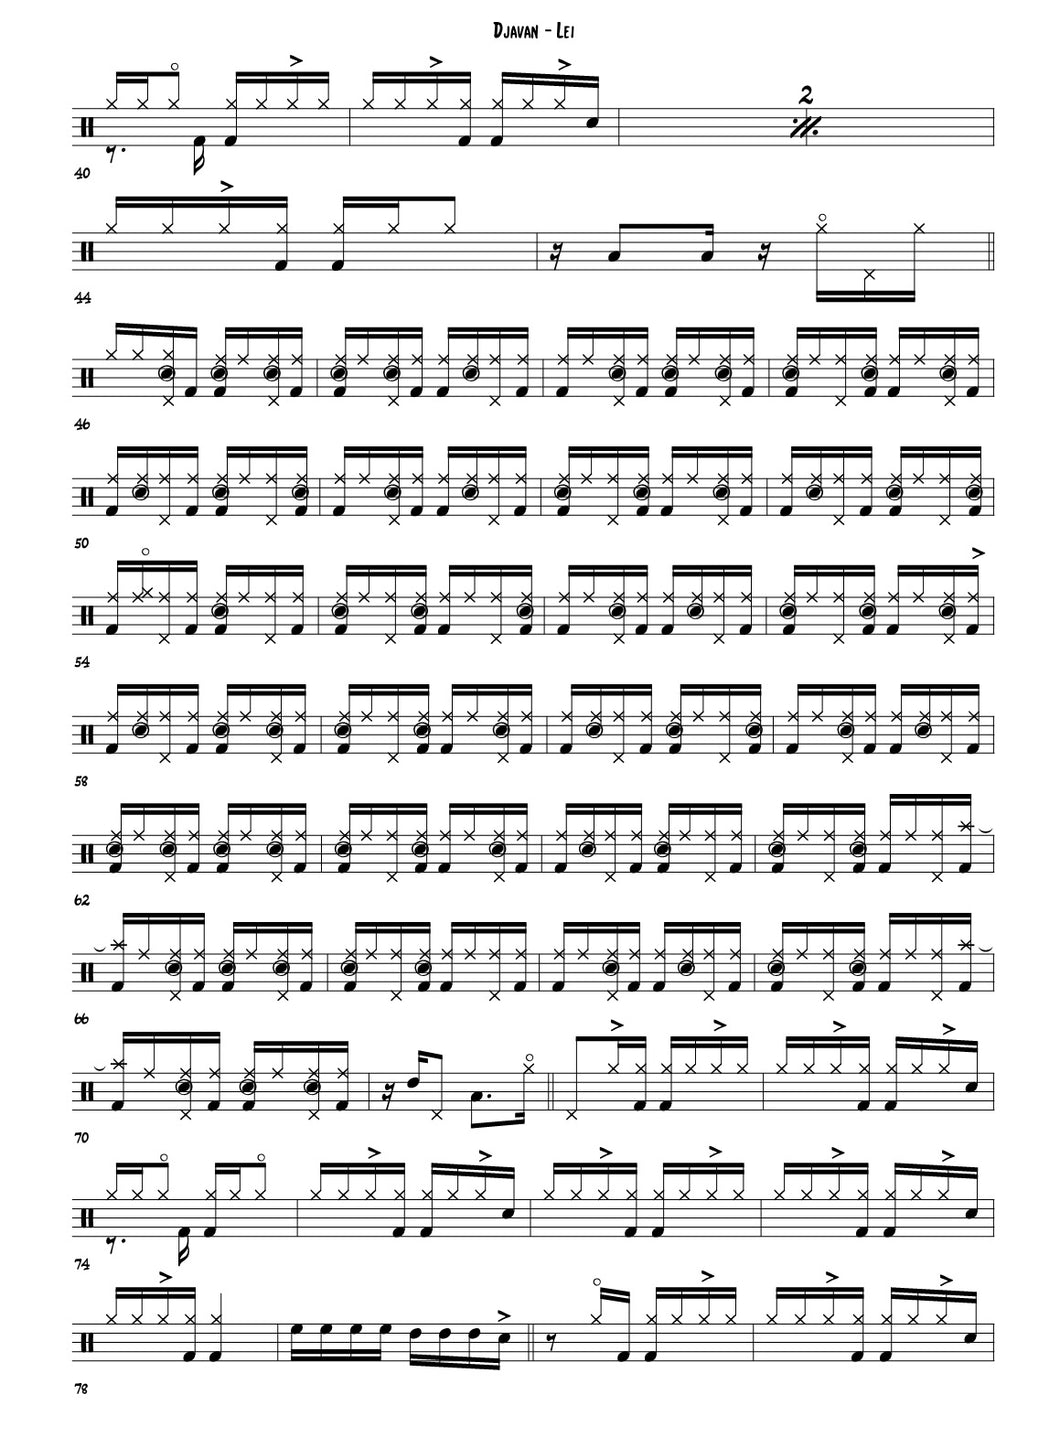 Lei - Djavan - Full Drum Transcription / Drum Sheet Music - FrancisDrummingBlog.com